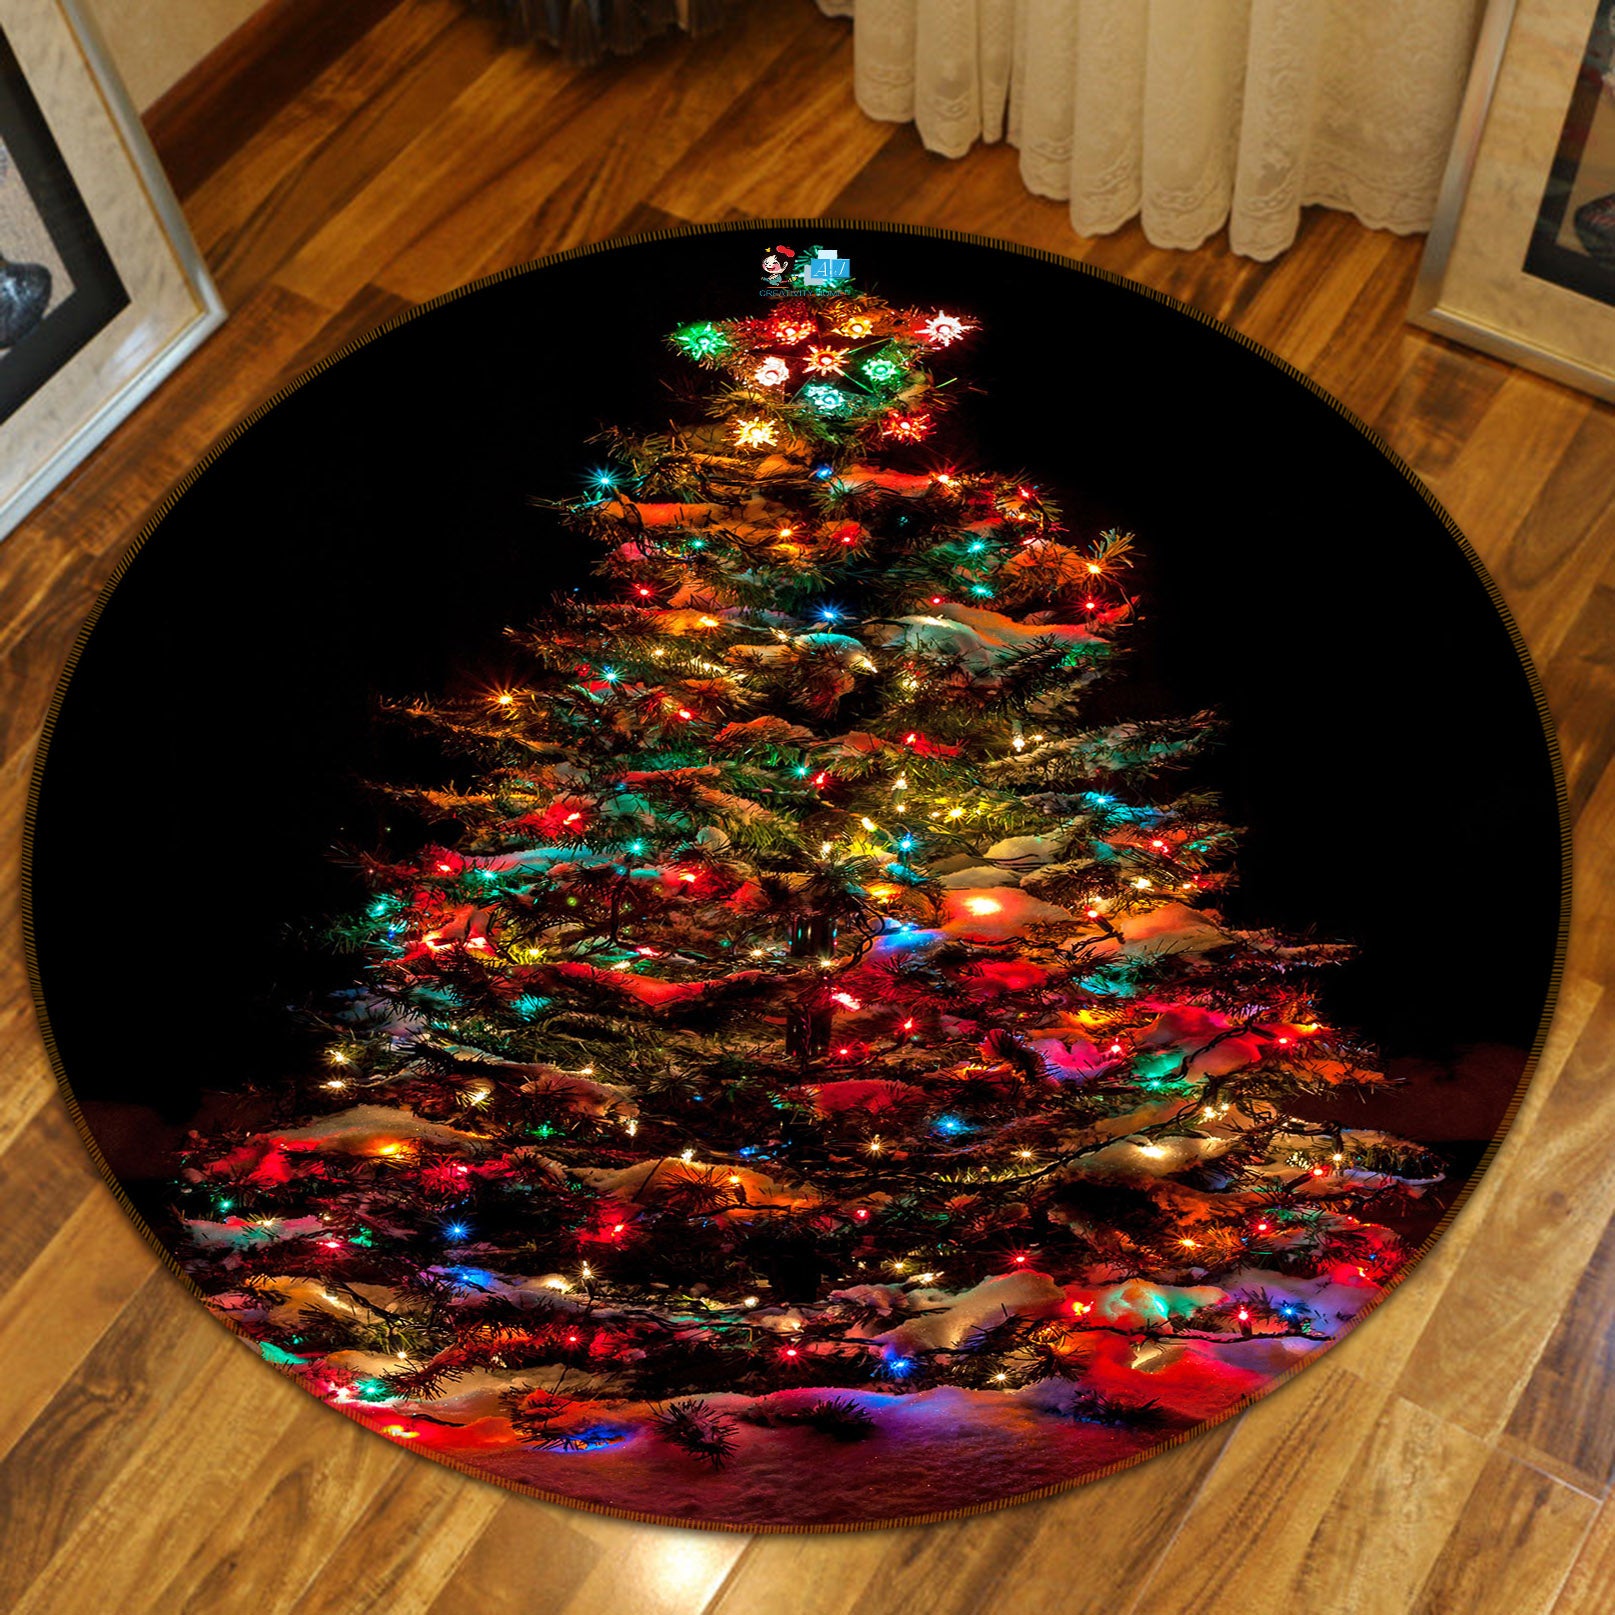 3D Colored Lights Tree 54132 Christmas Round Non Slip Rug Mat Xmas